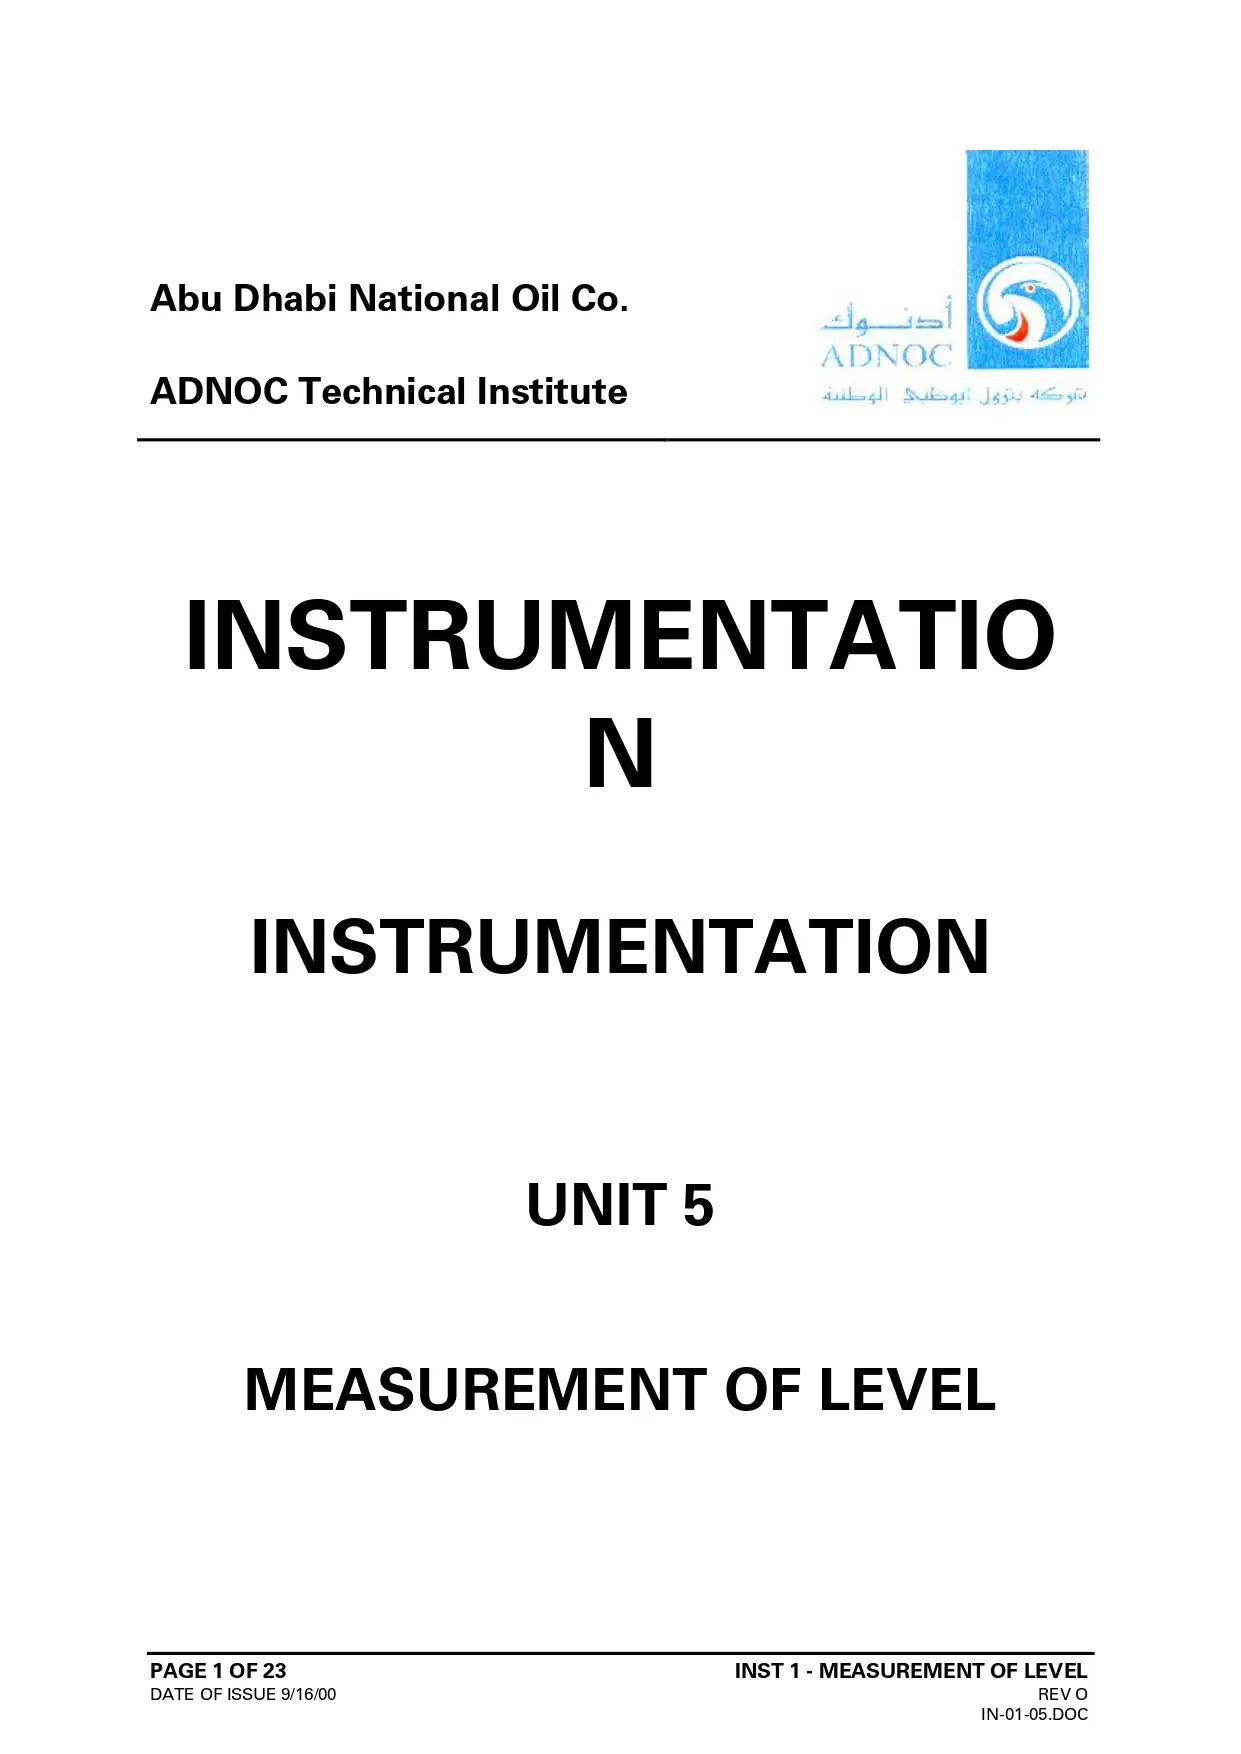 Instrumentation Unit 5 Measurement of Level